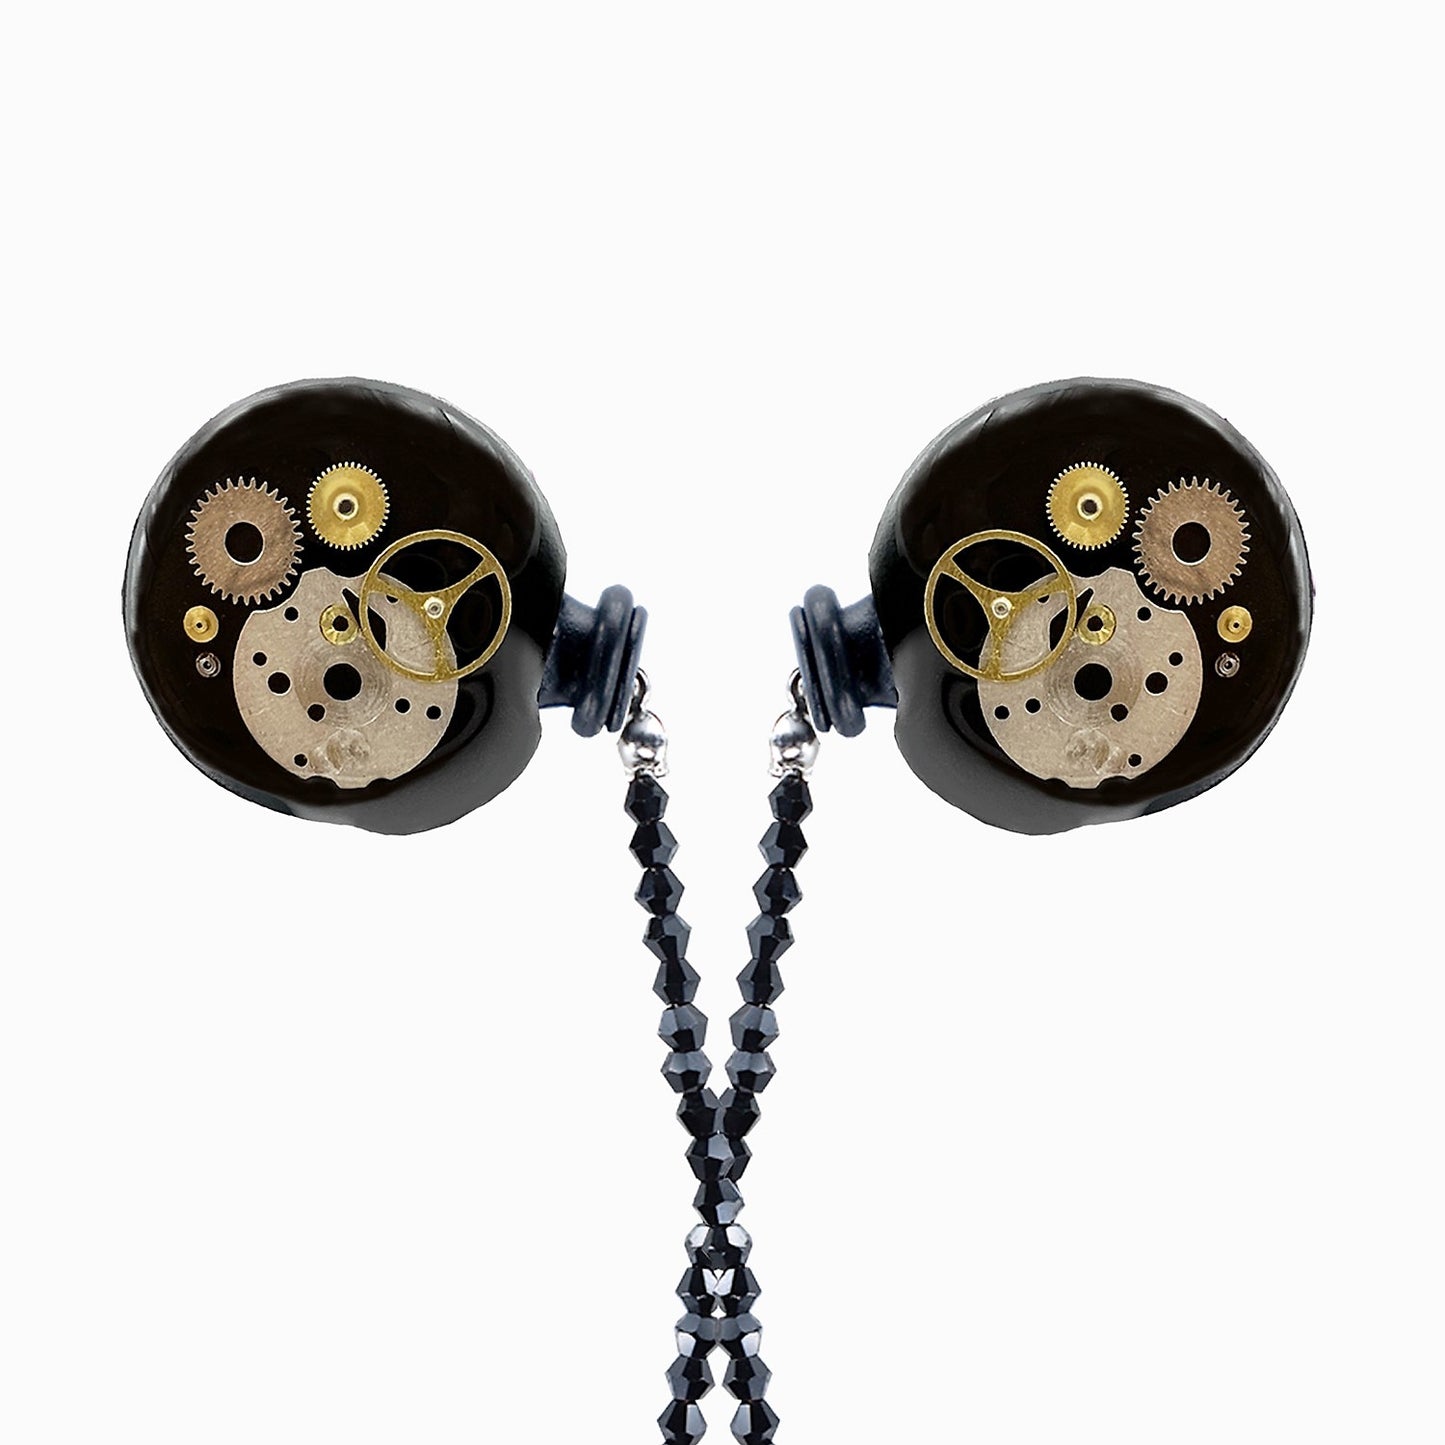 The Steampunk Earbud Drop